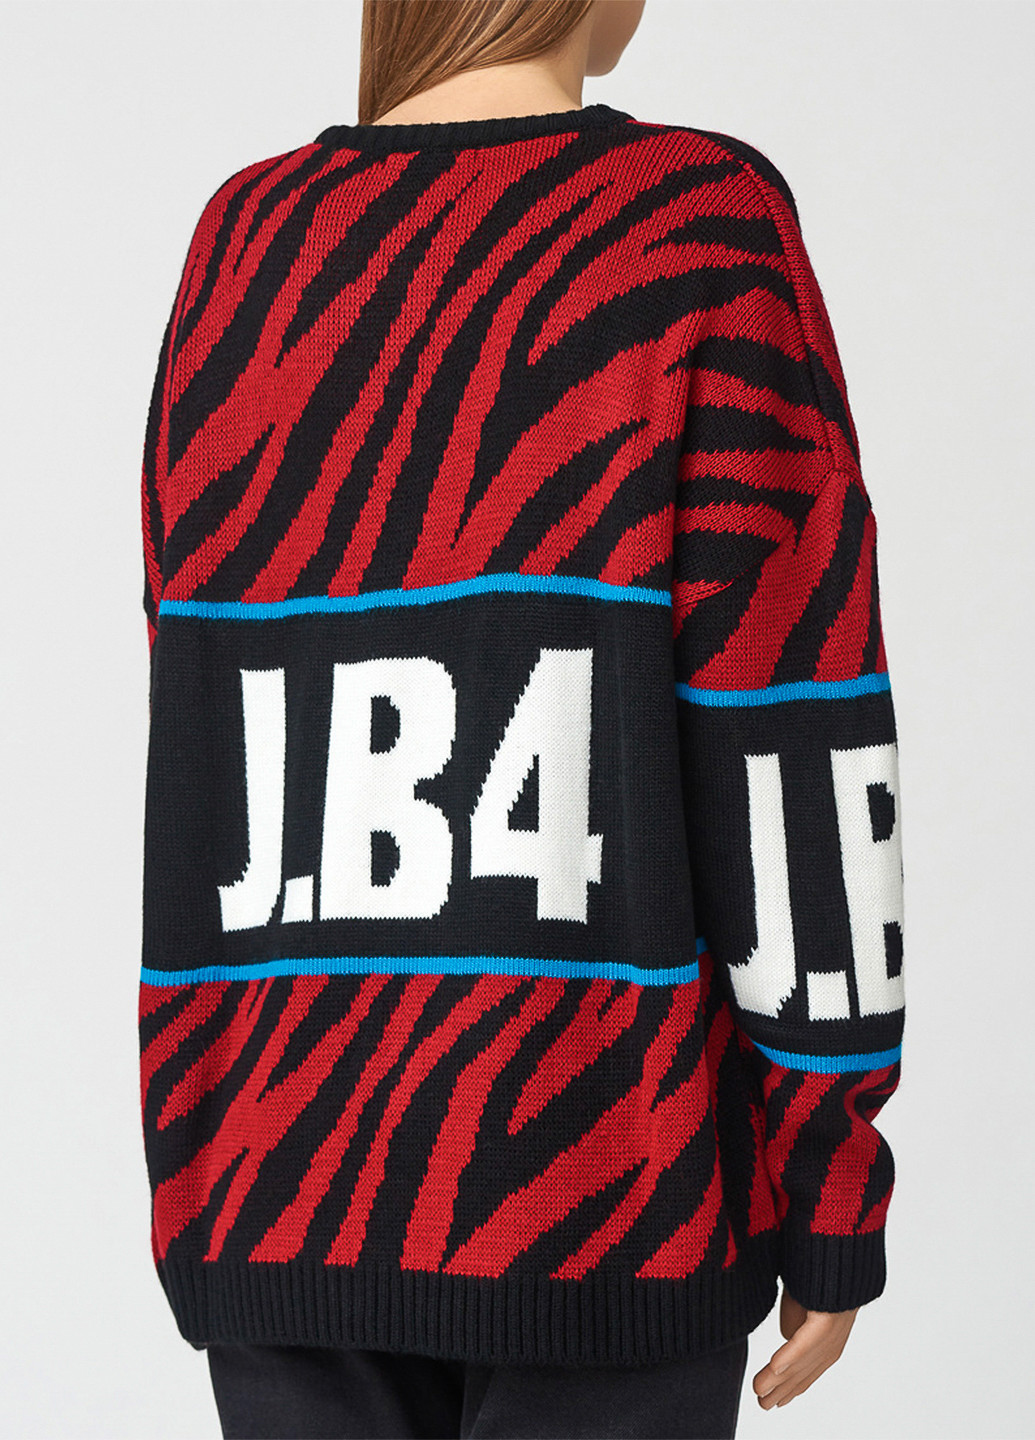 Комбинированный зимний свитер J.B4 (Just Before)